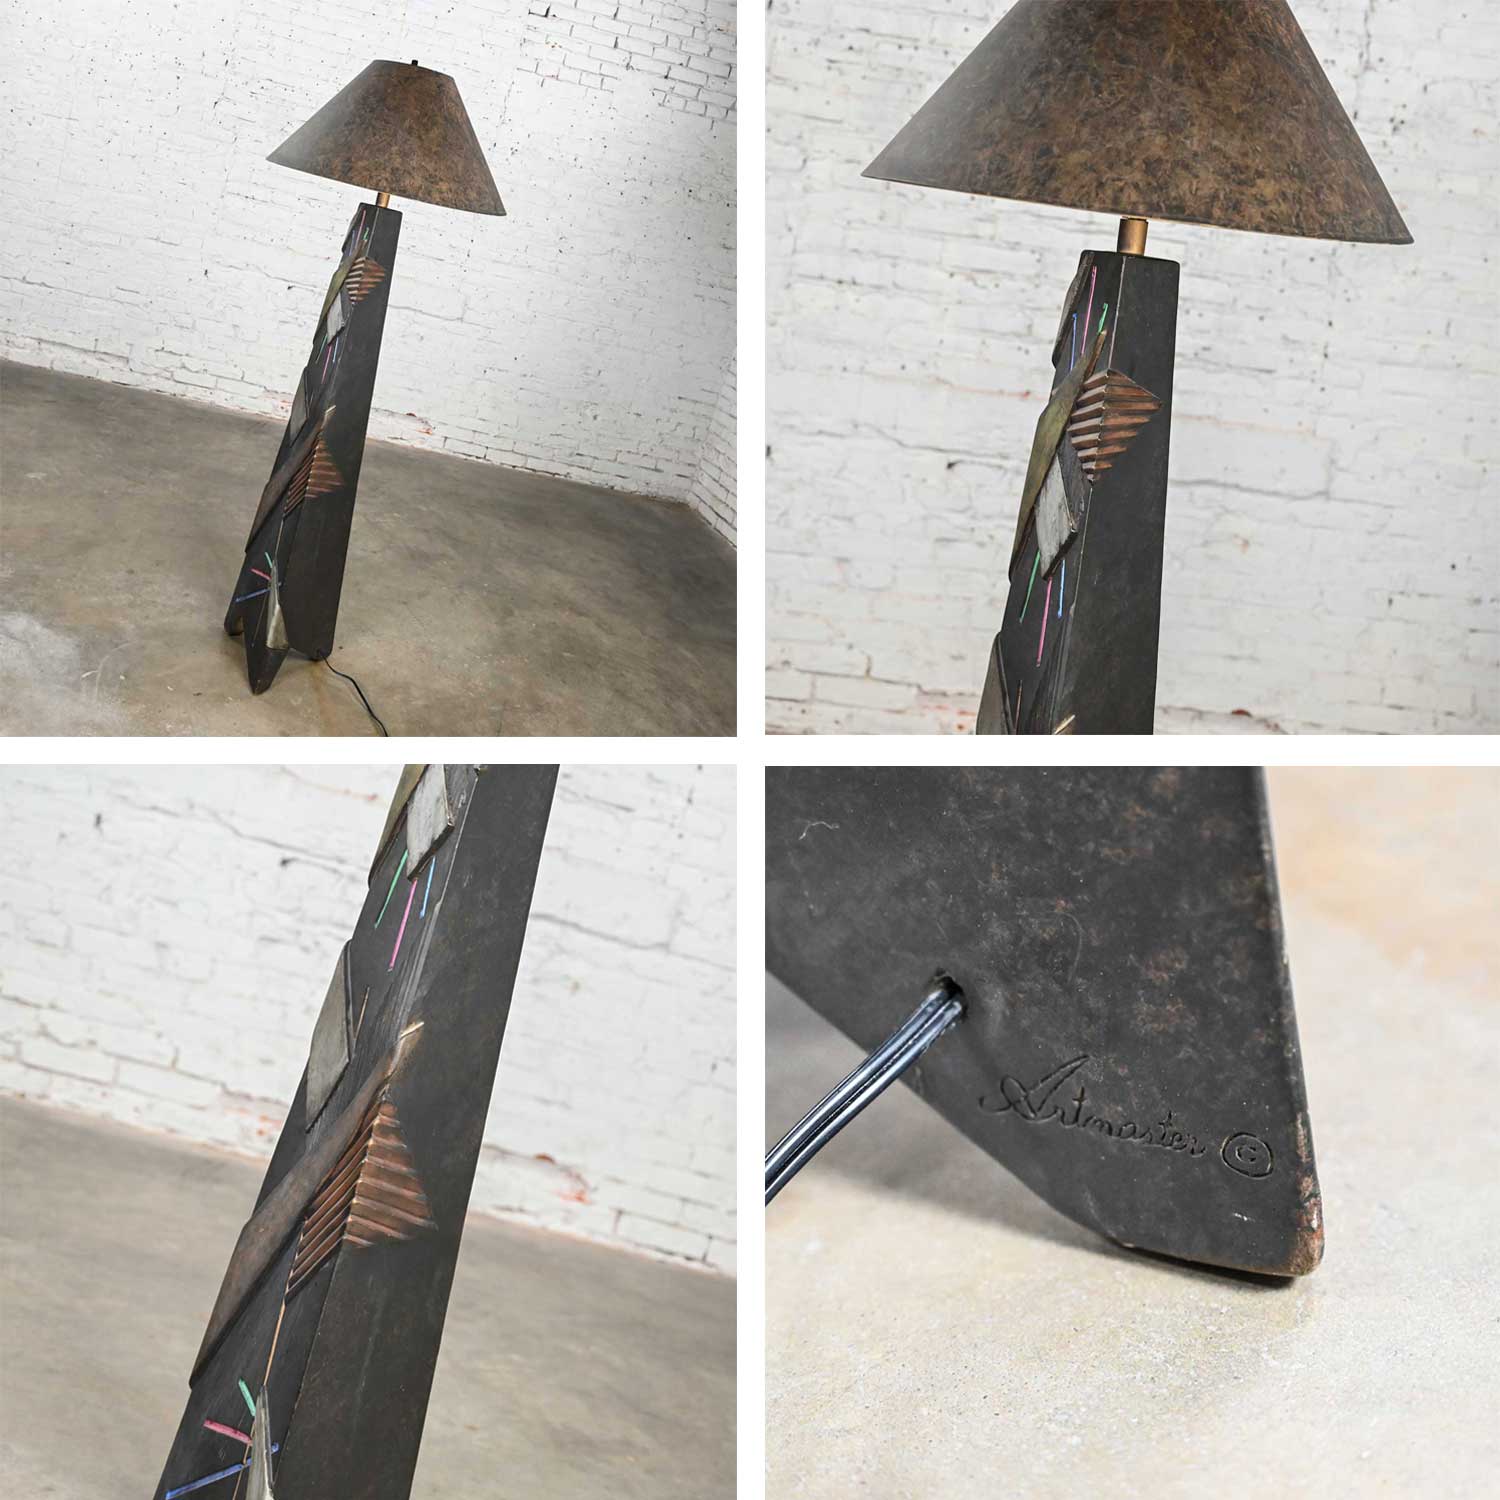 Postmodern Artmaster Studios Geometric Triangular Hand Painted Plaster Floor Lamp